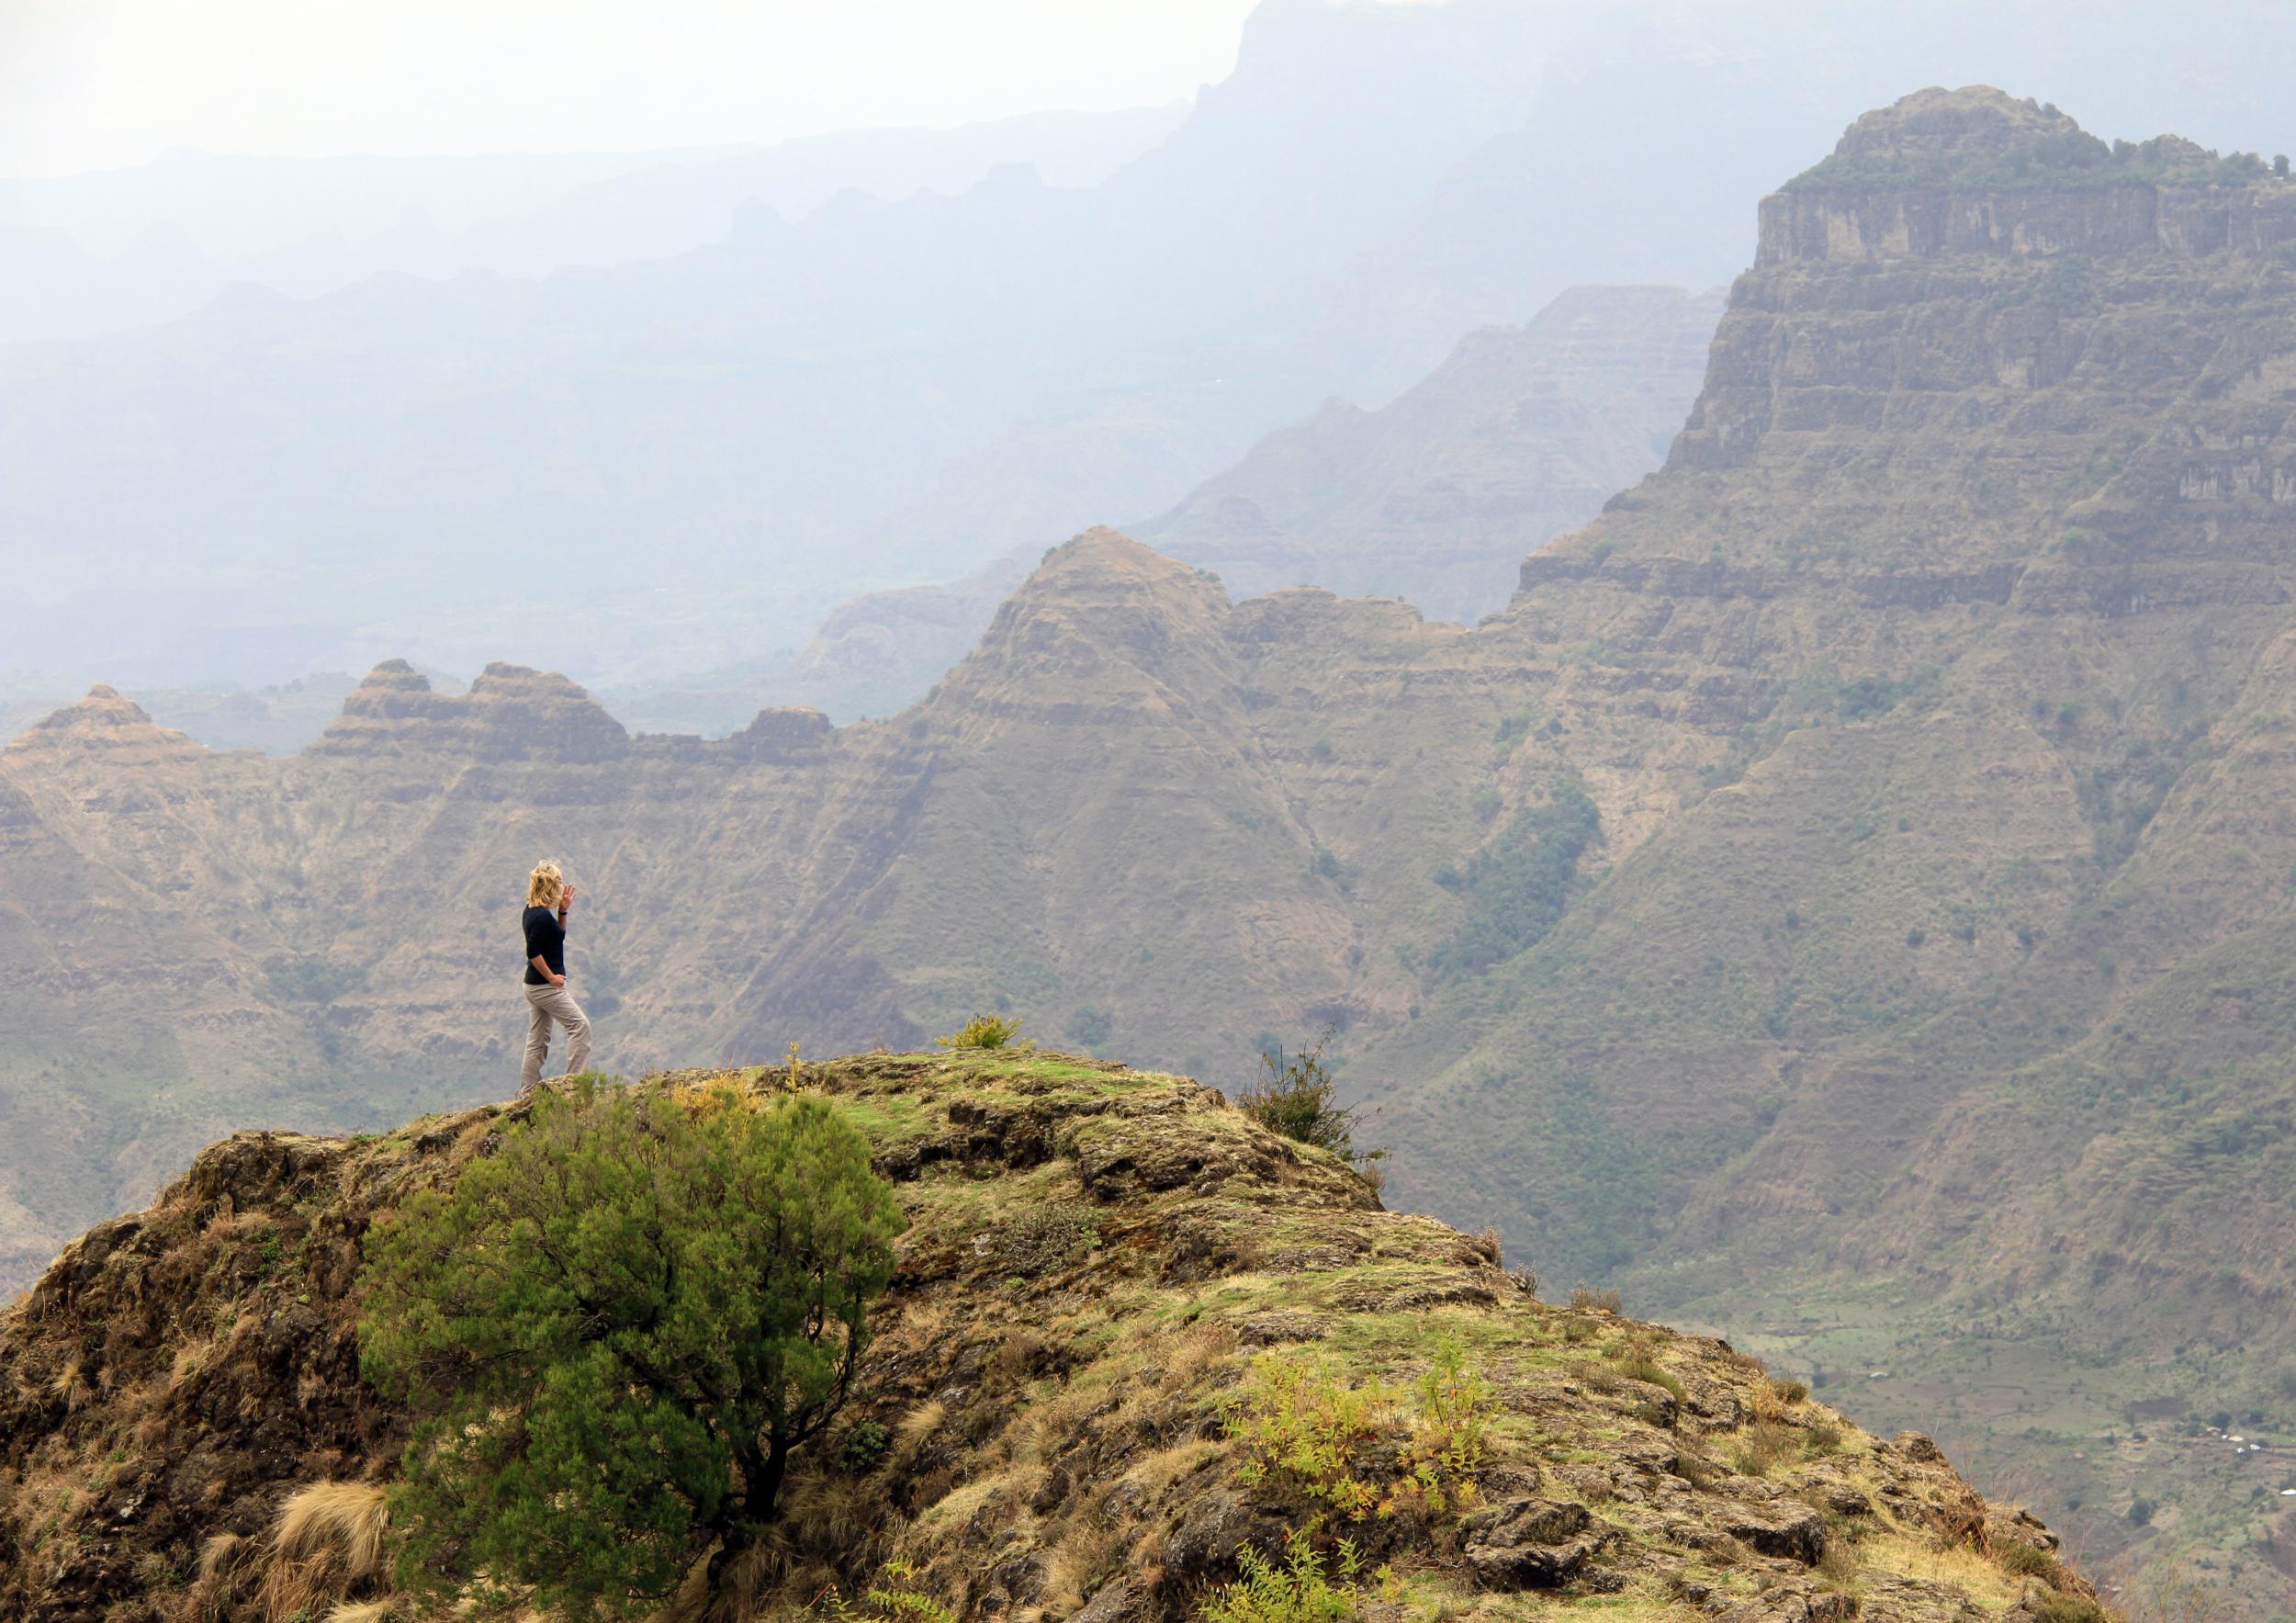 Writer Sue in northern Ethiopia's mountainous landscape